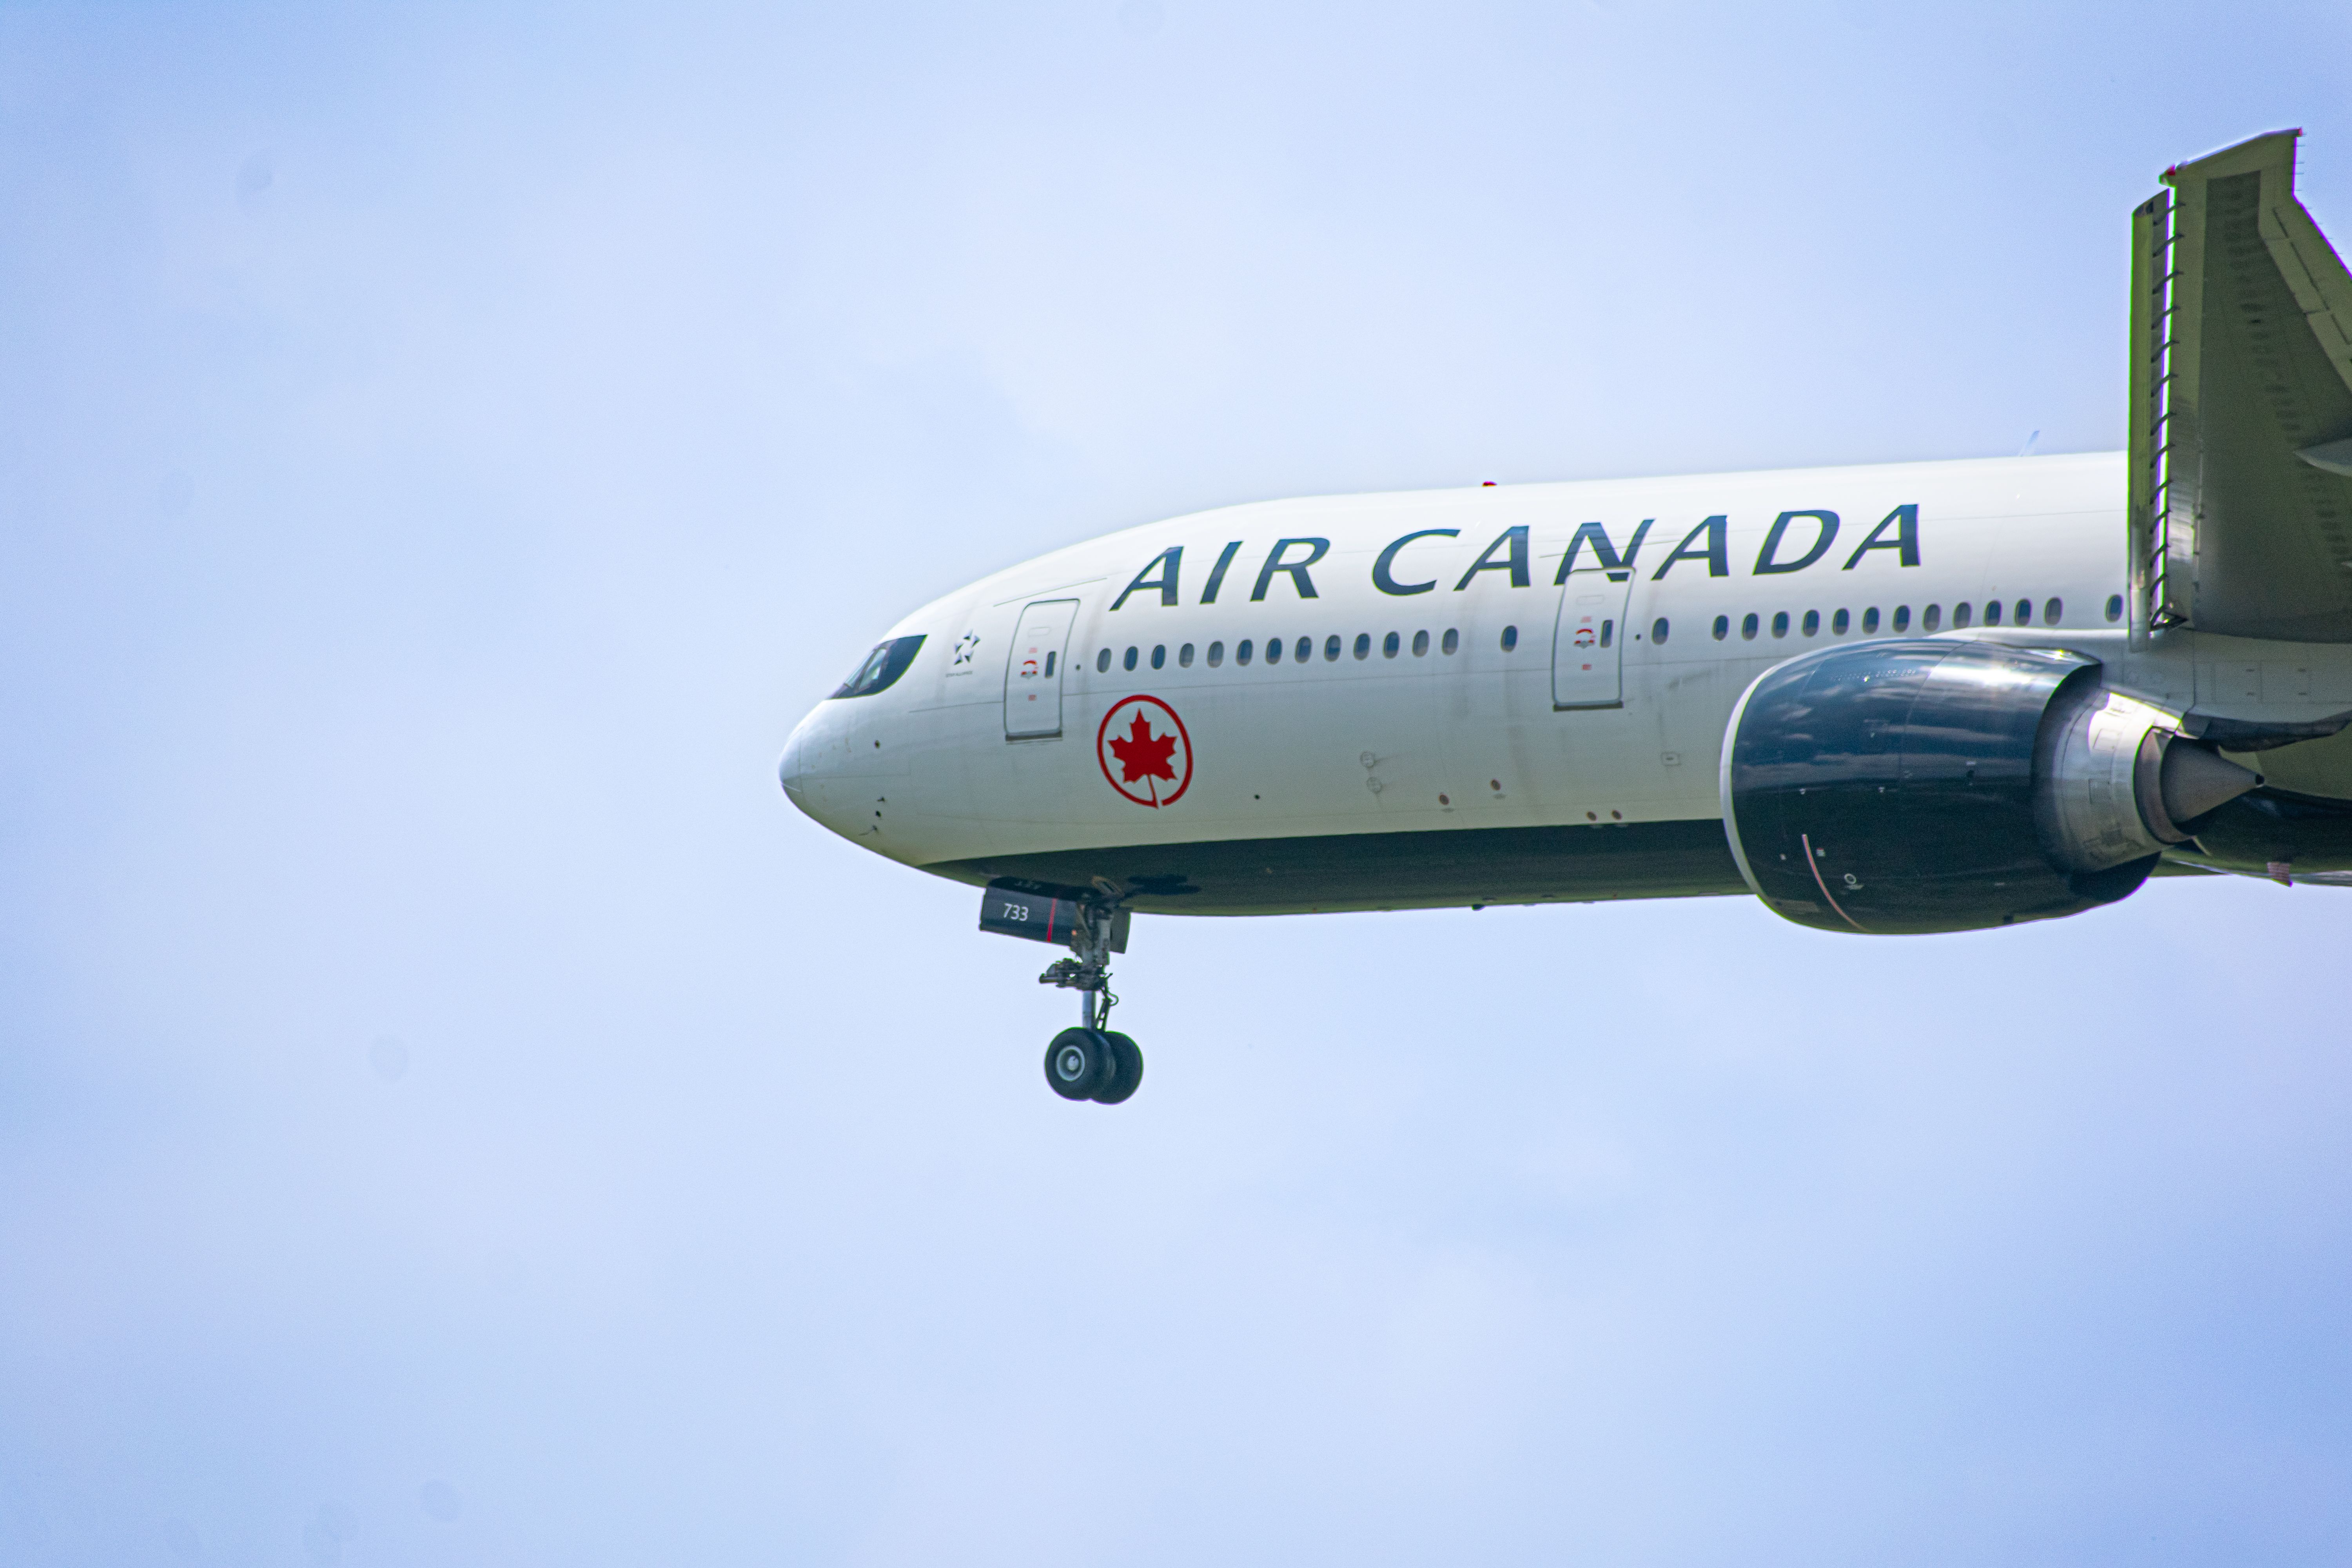 Air Canada 777-300ER landing at LAX